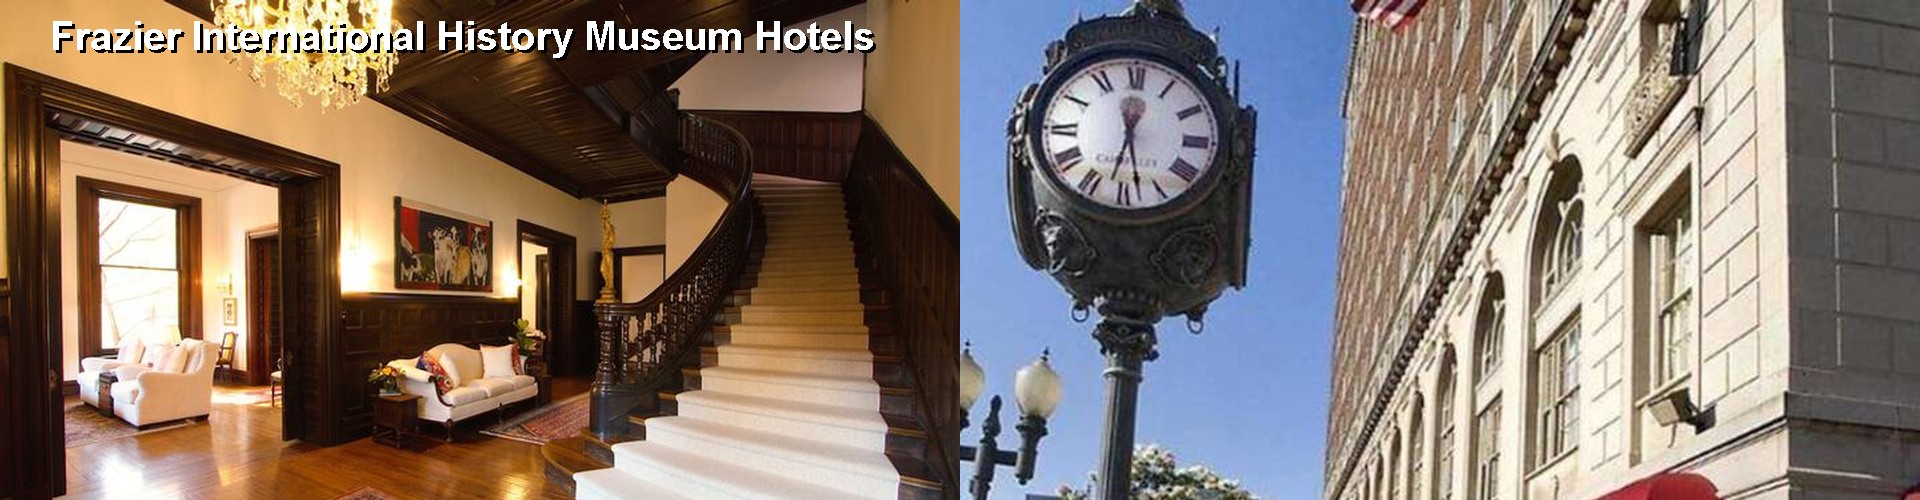 5 Best Hotels near Frazier International History Museum